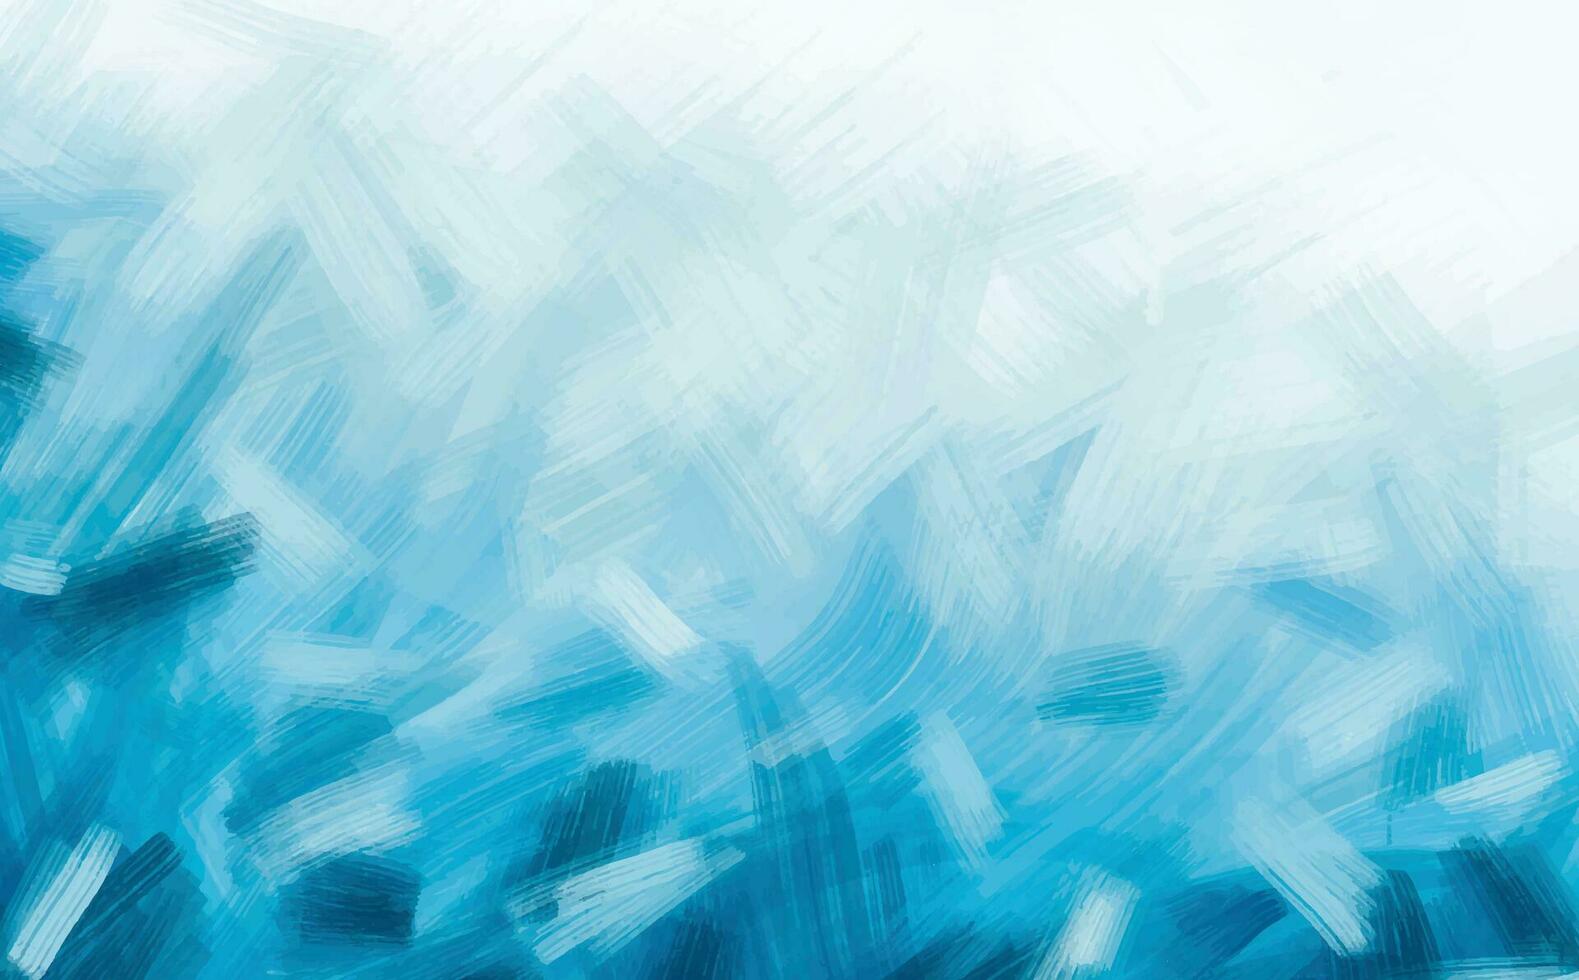 abstract blauw winter waterverf achtergrond. lucht patroon met sneeuw. licht blauw waterverf papier structuur achtergrond. vector water kleur ontwerp illustratie